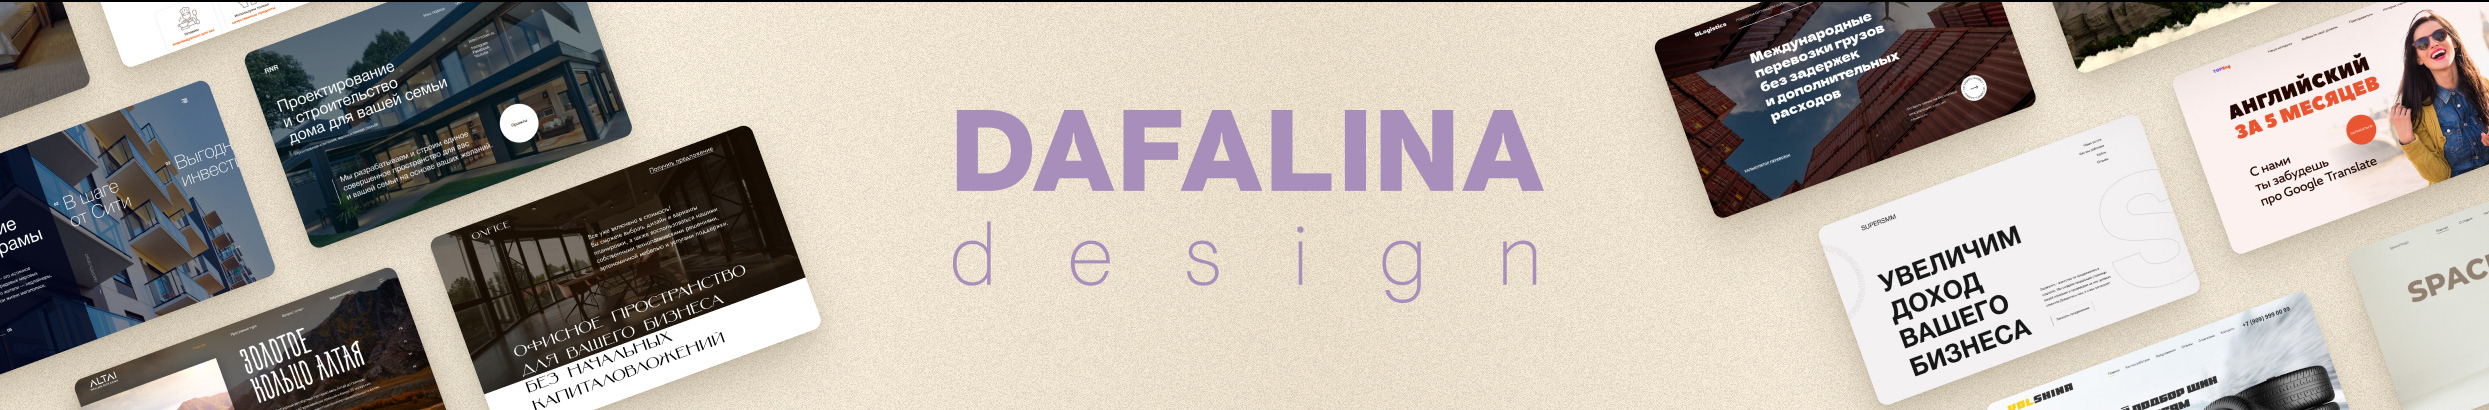 Dafalina Design profil başlığı